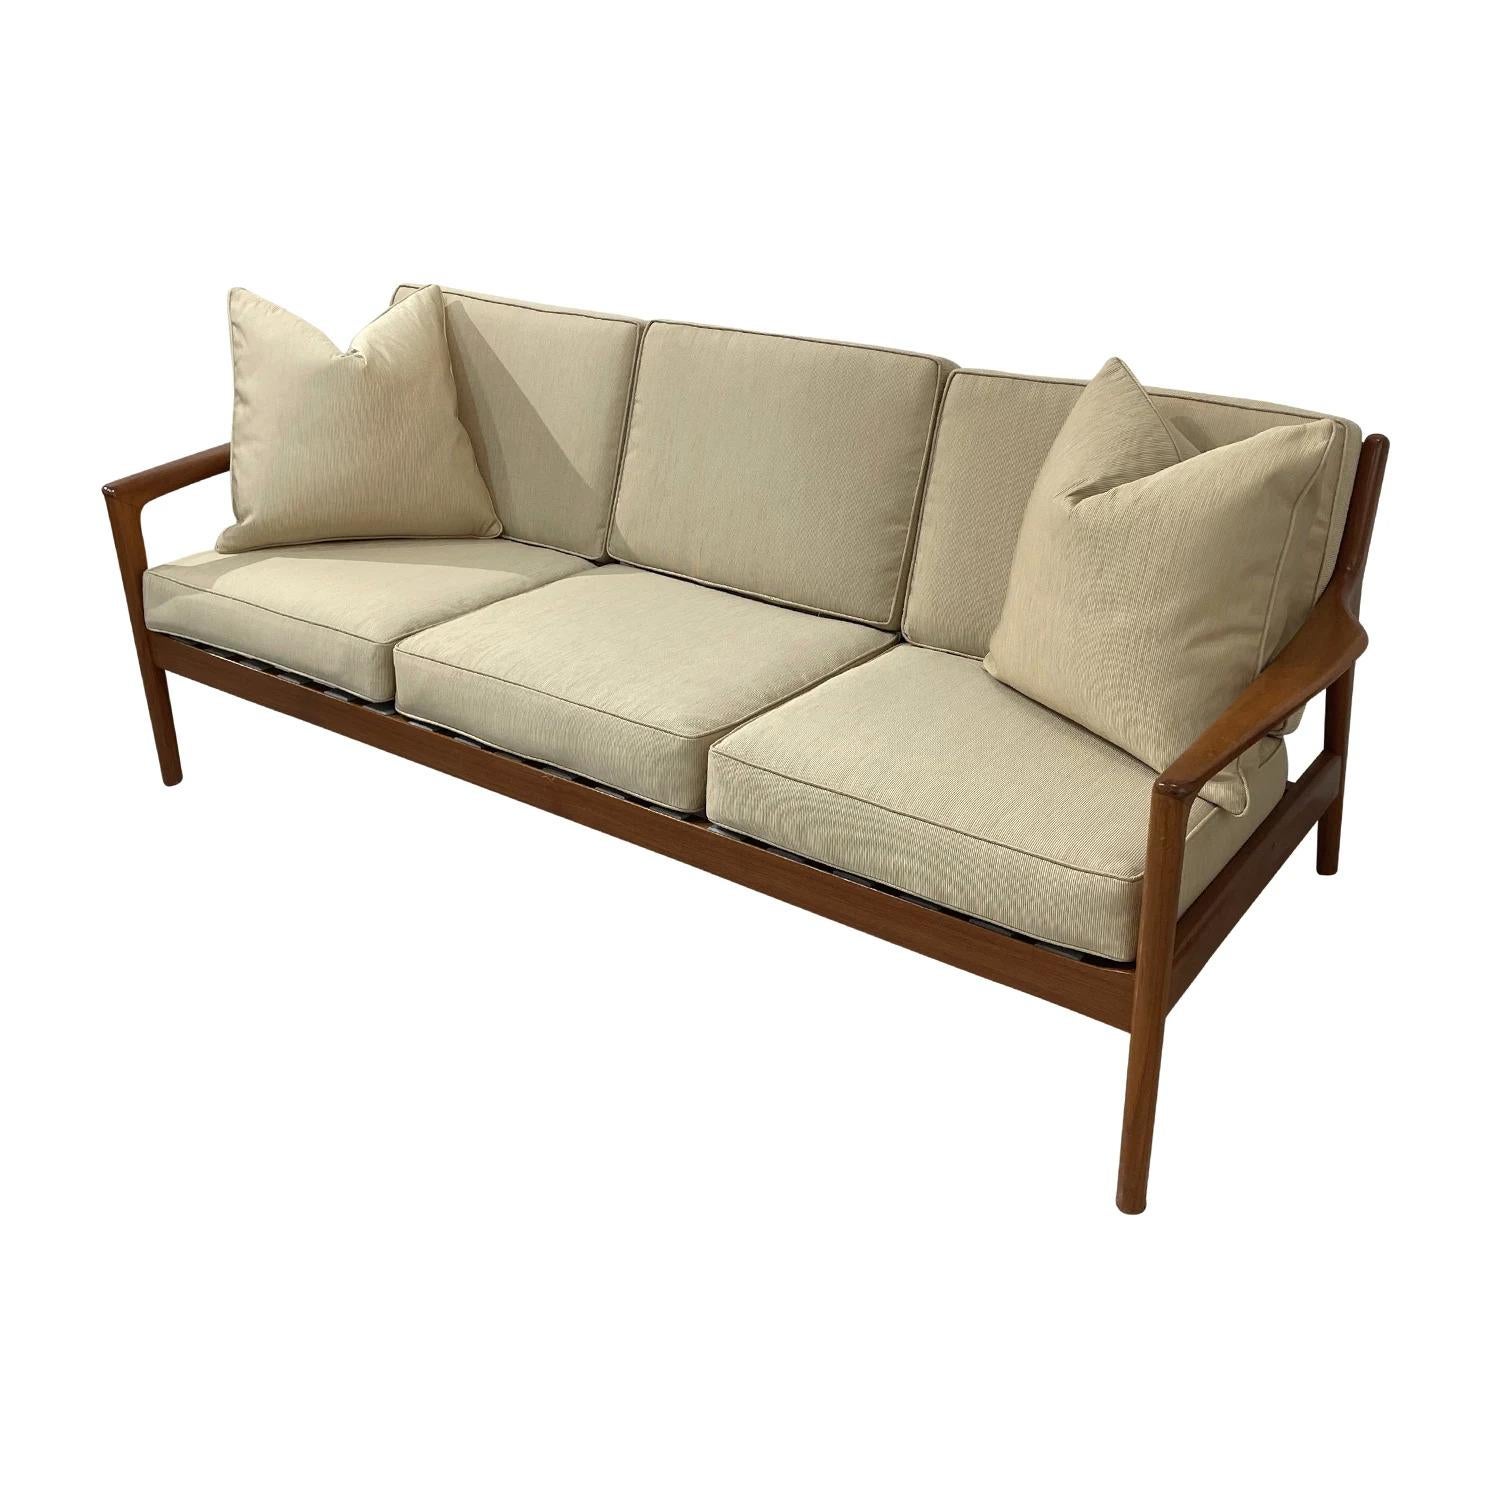 20th Century Swedish Dux Three Seater Teak Sofa, Vintage Settee by Folke Ohlsson For Sale 1